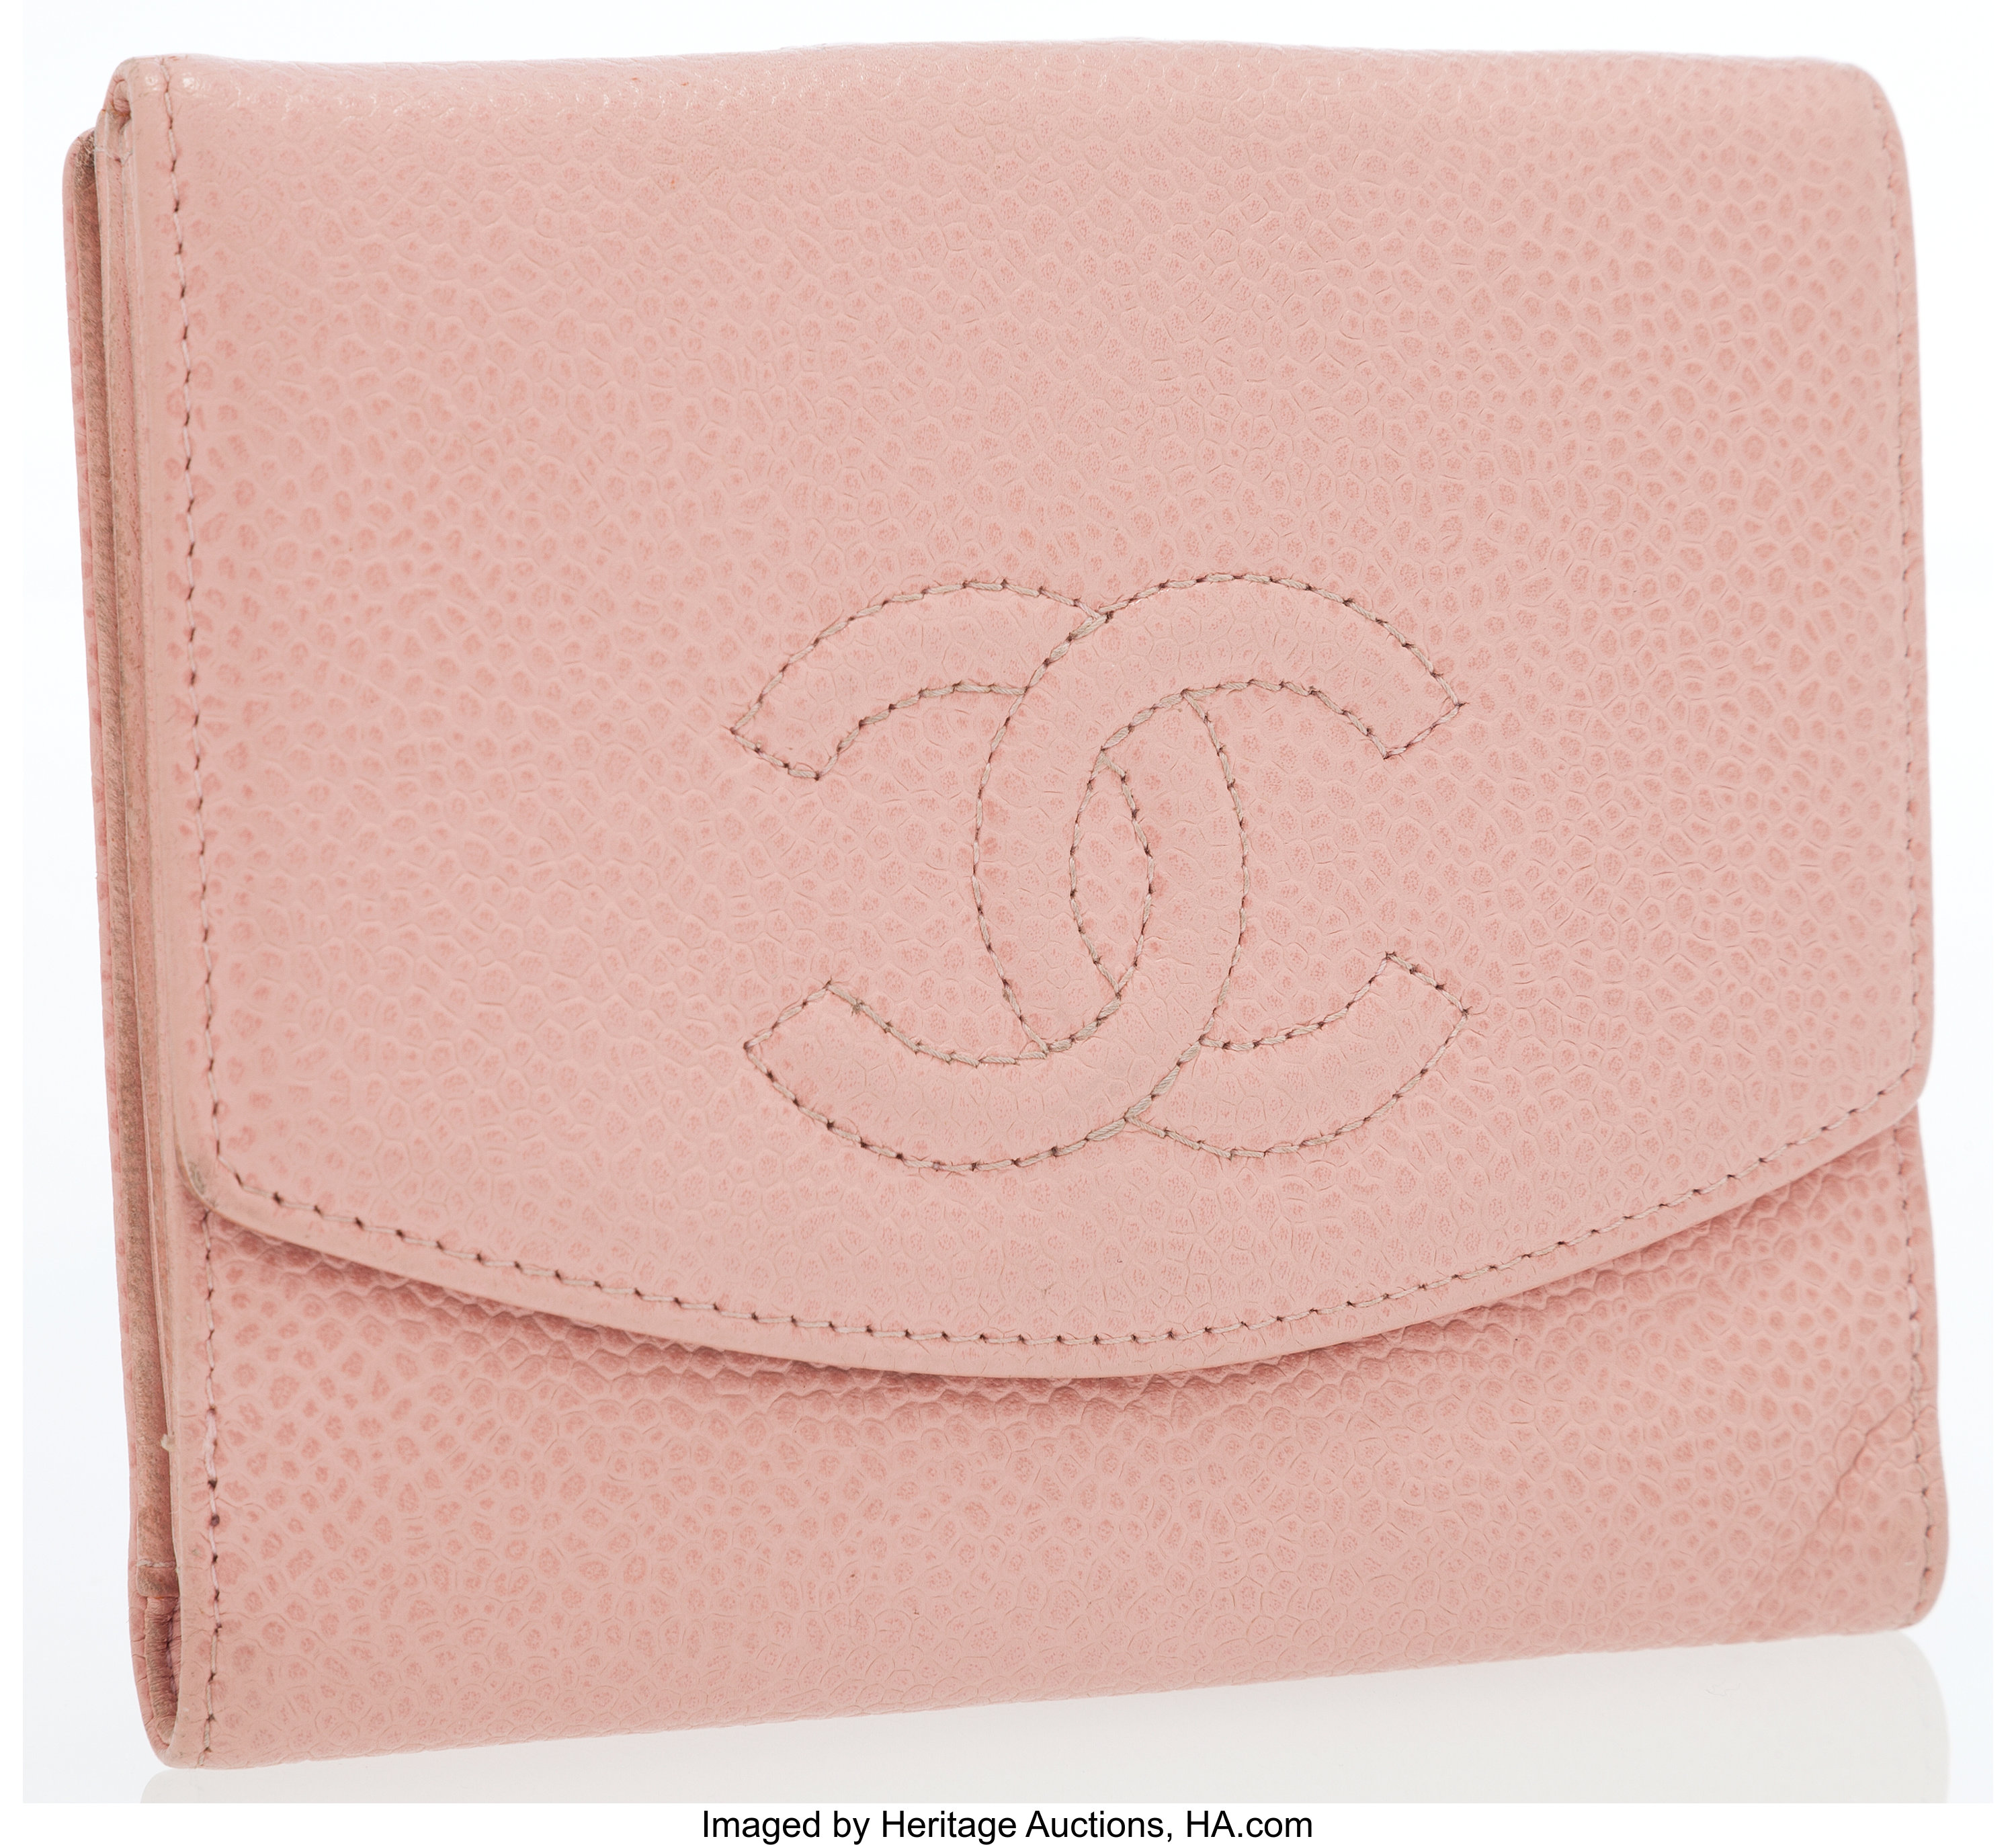 Chanel Vintage Chanel Pink Caviar Leather CC Logo Bifold Wallet